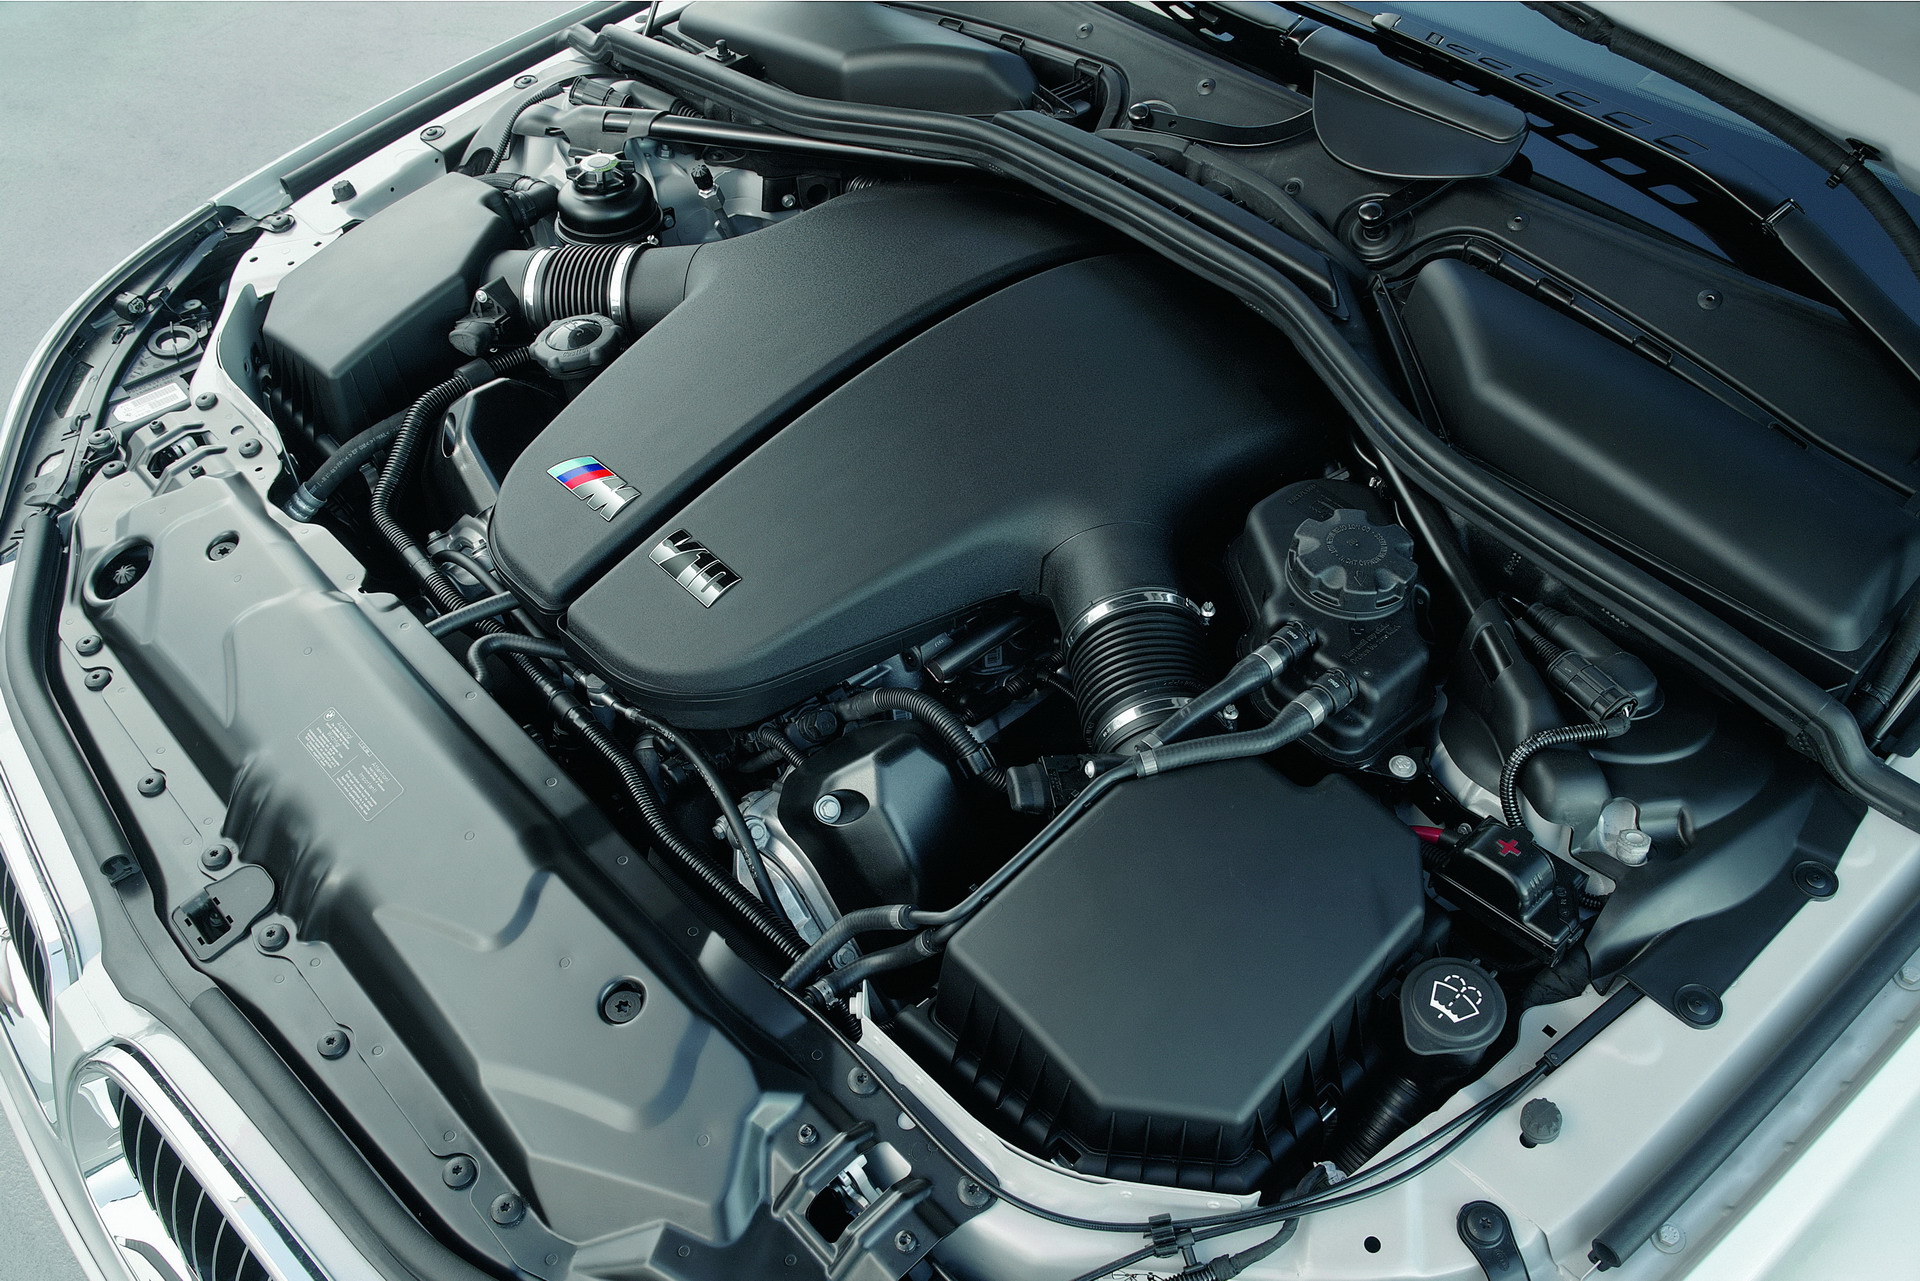 The BMW S85 V10 engine 10